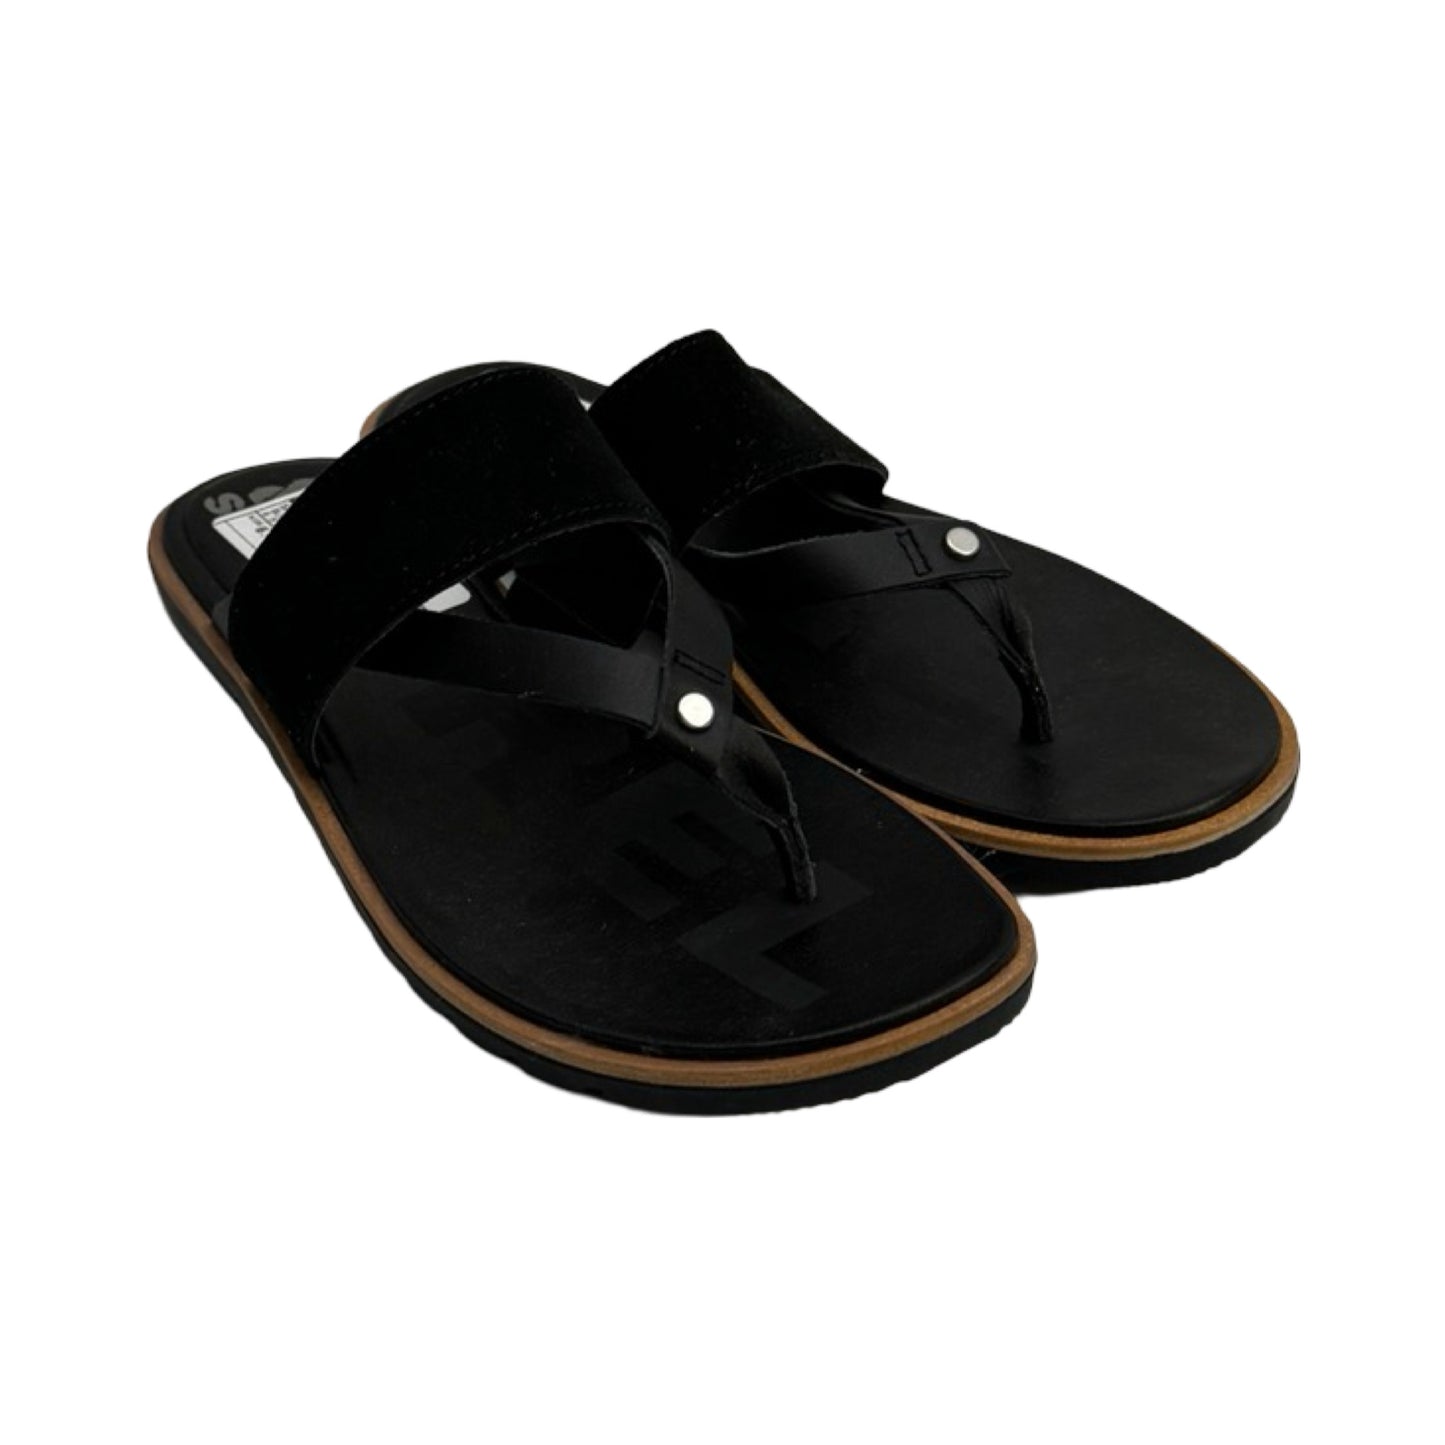 Sandals Flip Flops By Sorel  Size: 6.5